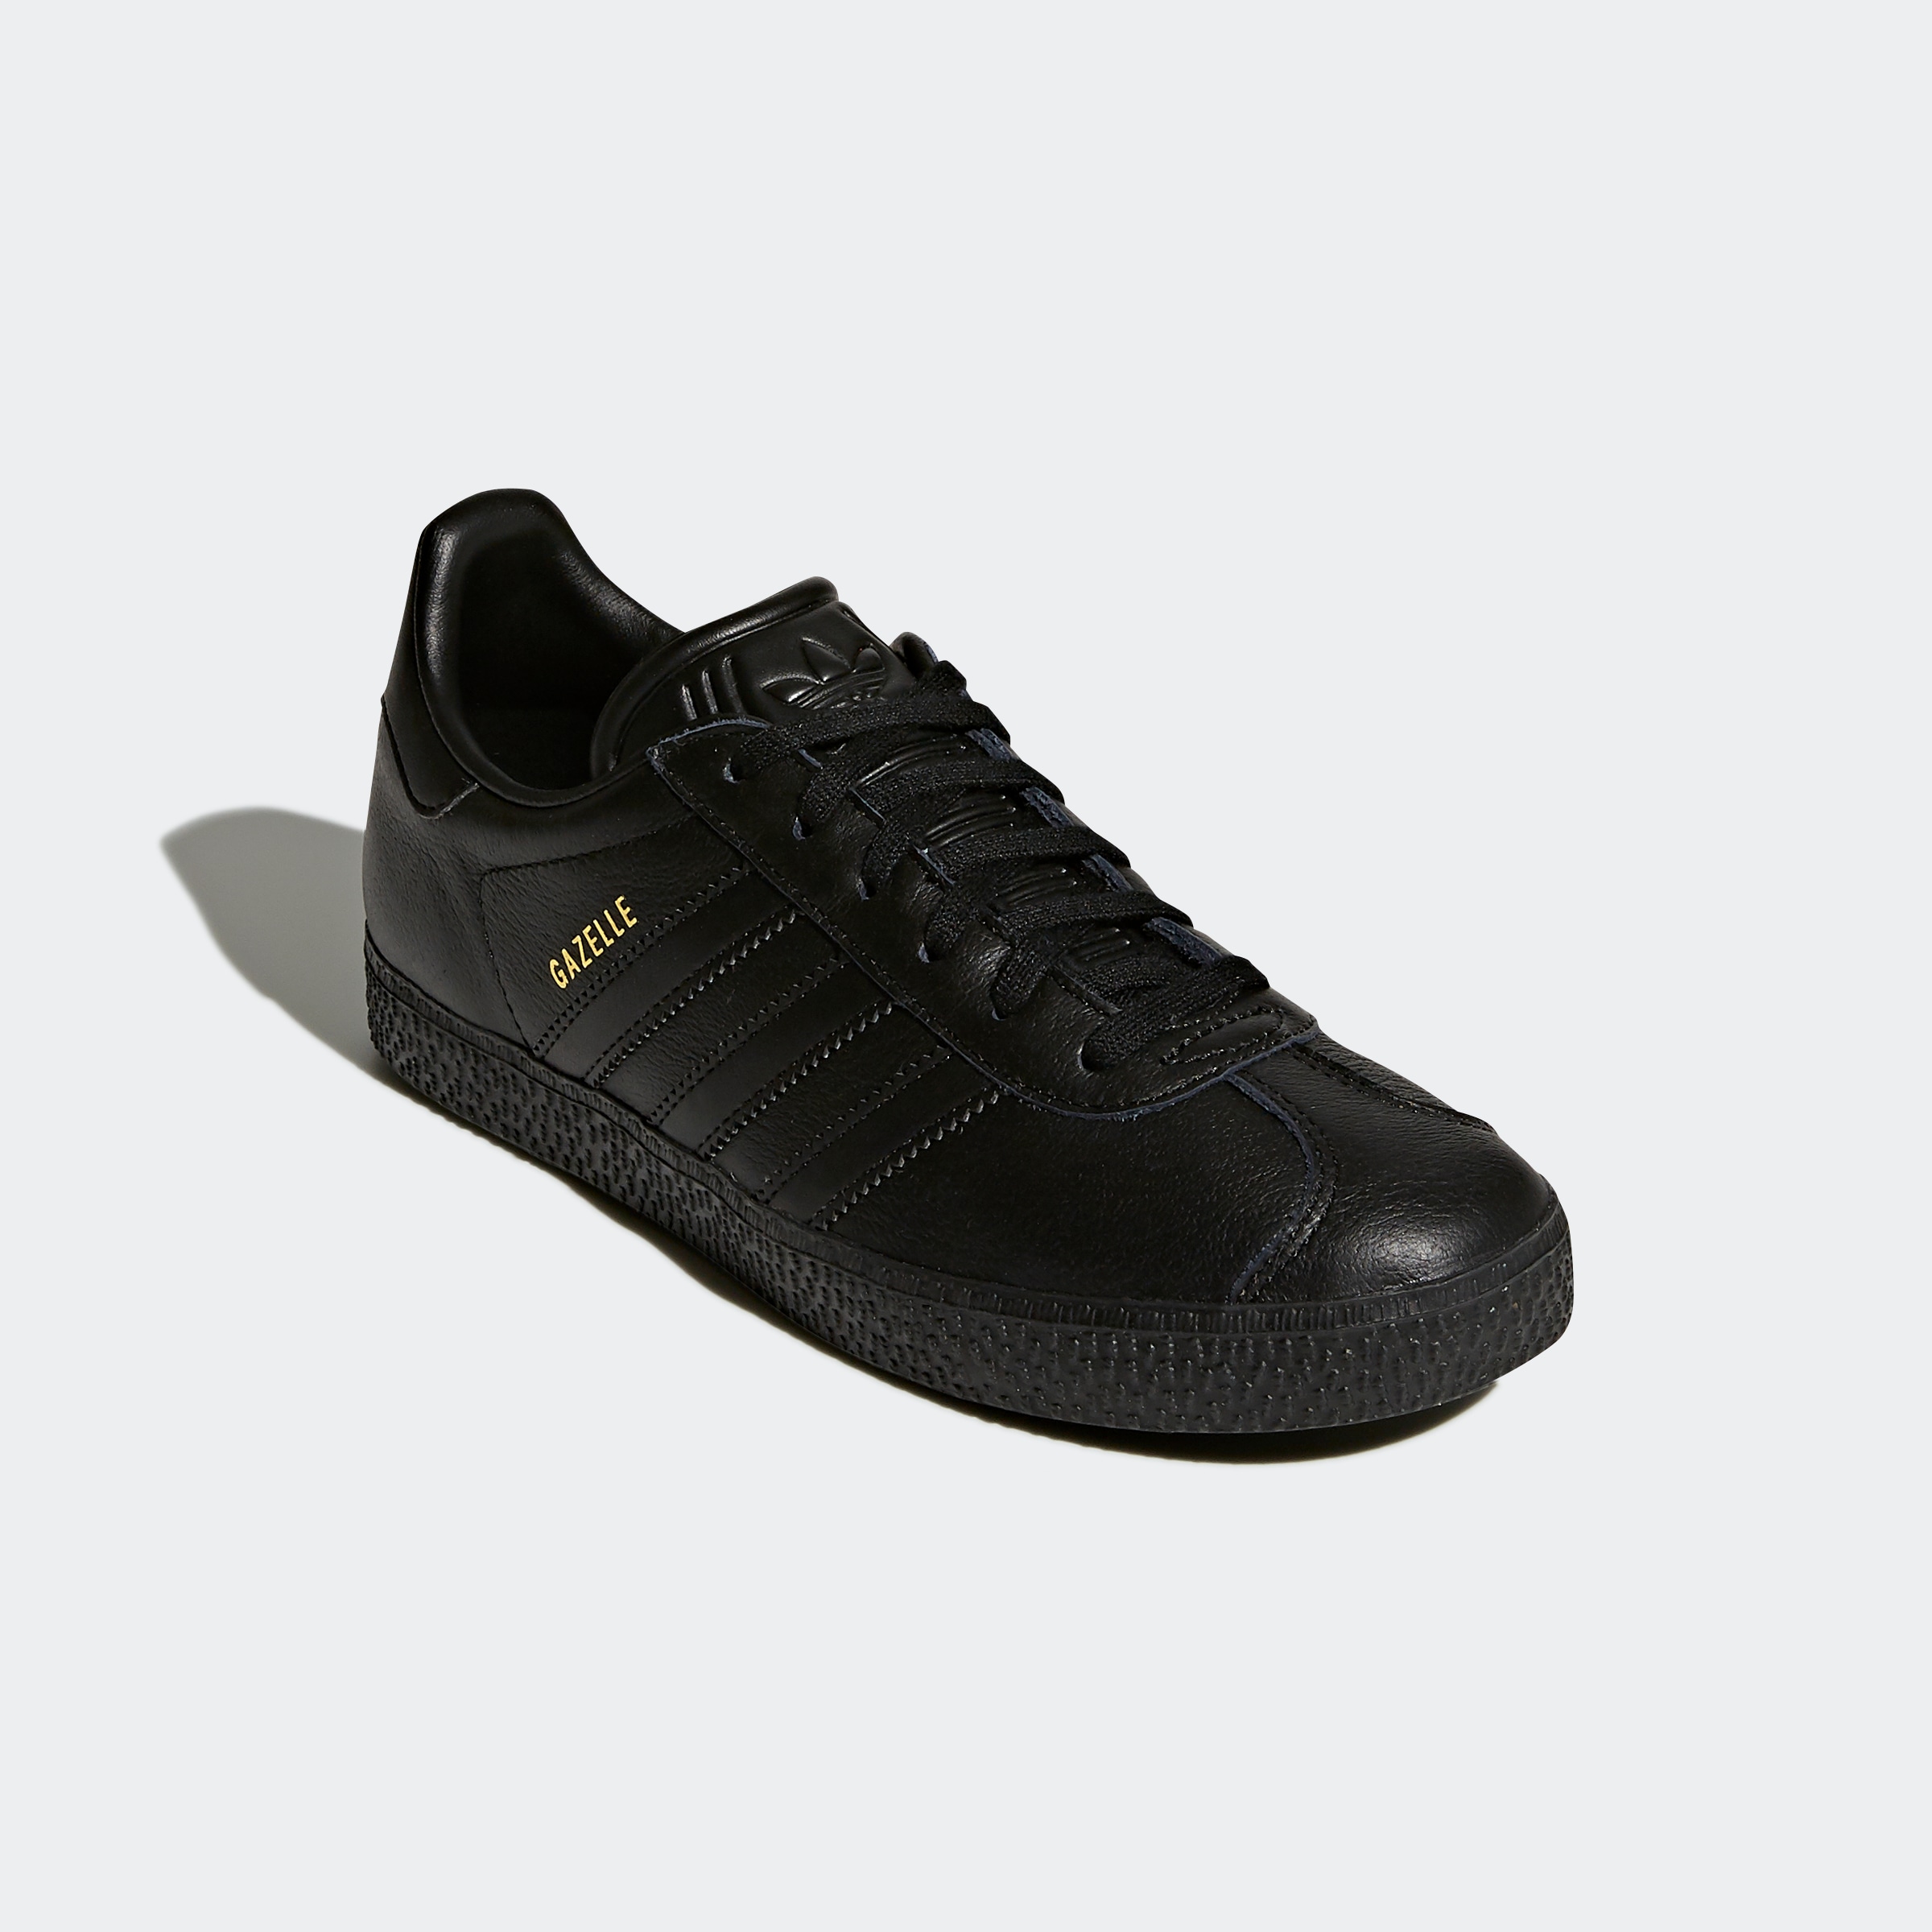 adidas Unisex-Kinder Gazelle Sneakers, Schwarz (Core Black/core Black/core Black), 36 EU